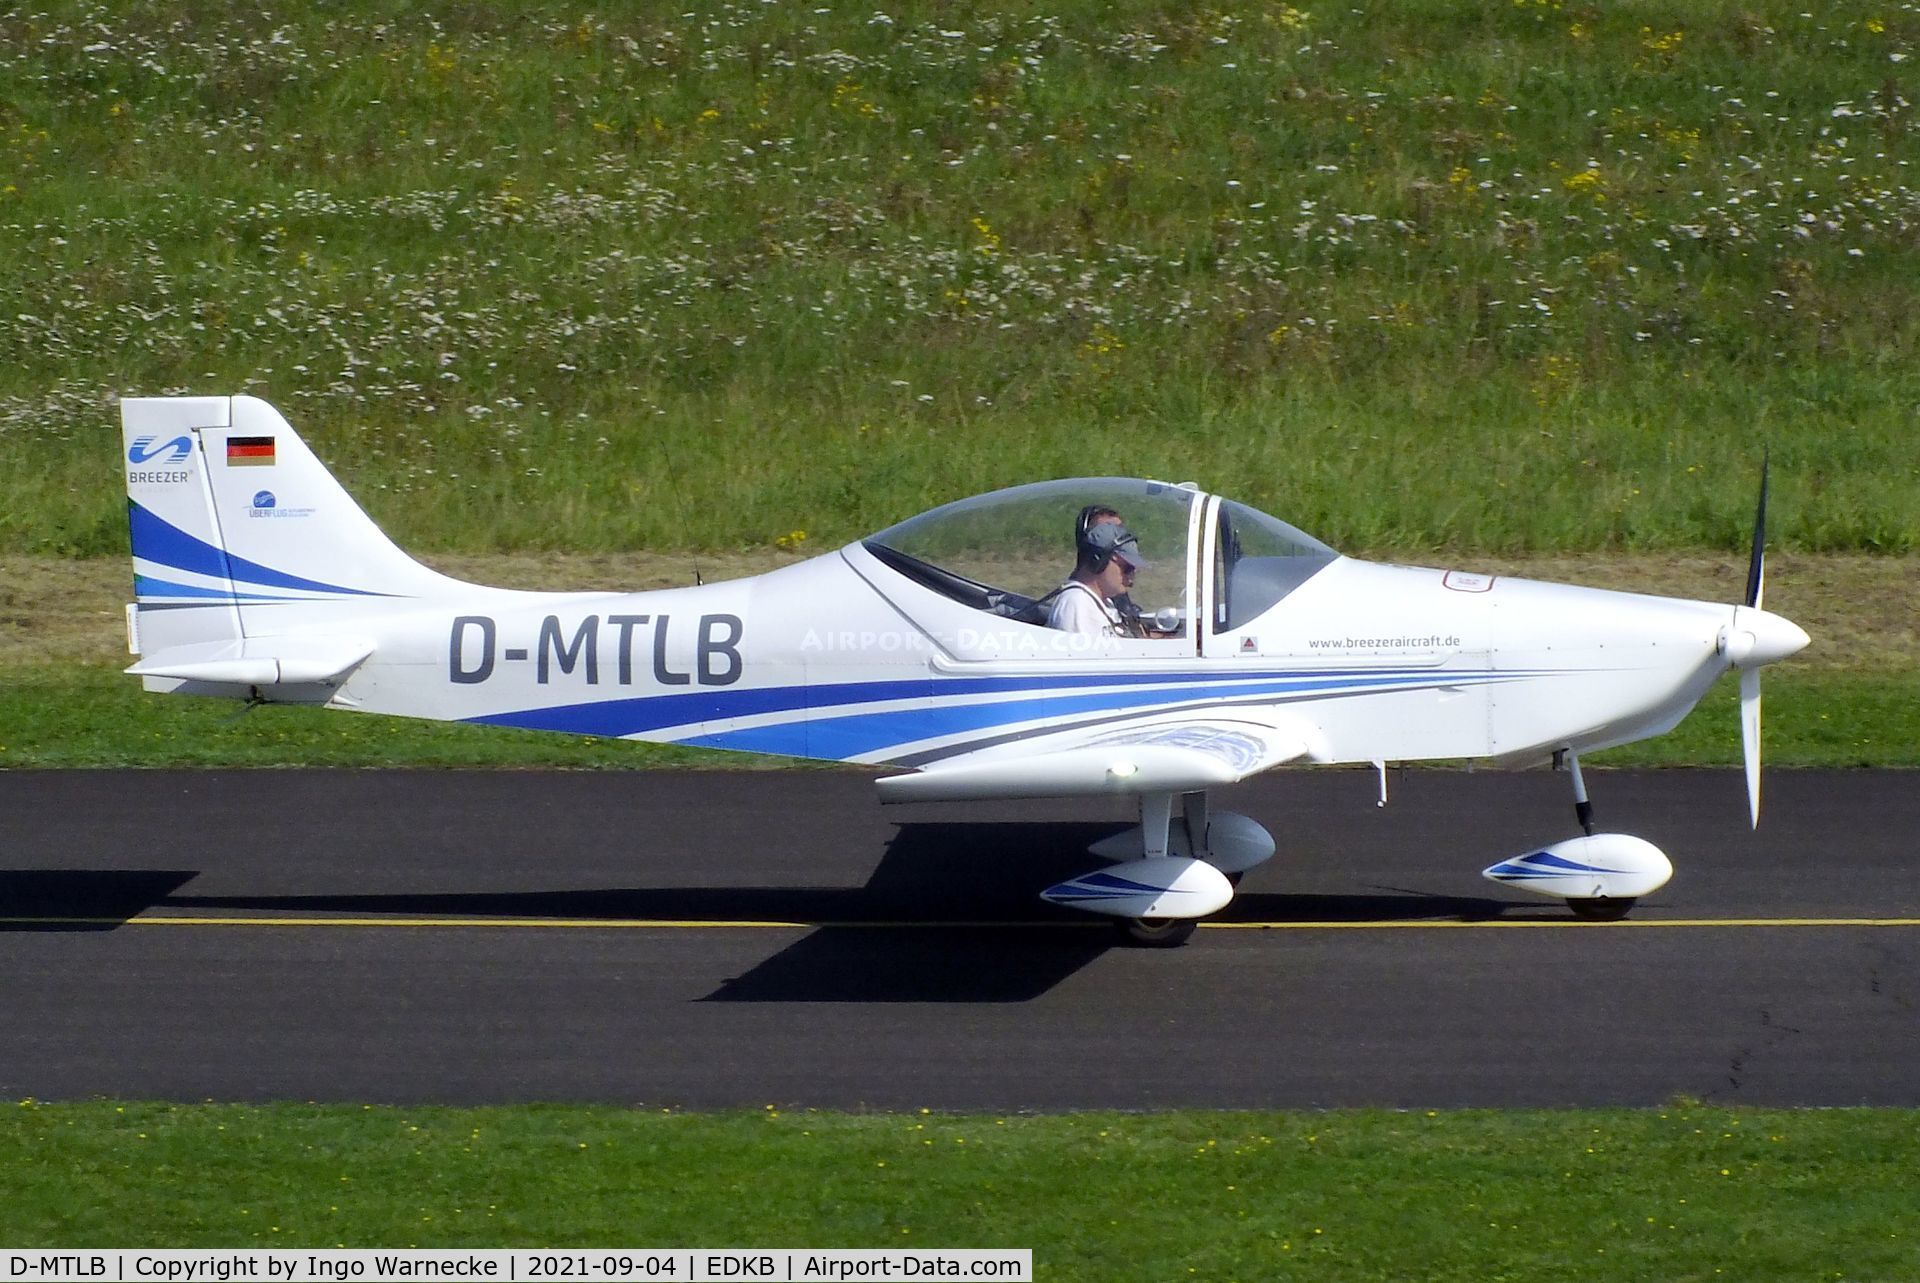 D-MTLB, Aerostyle Breezer B400 C/N Not found D-MTLB, Aerostyle Breezer B400 at Bonn-Hangelar airfield during the Grumman Fly-in 2021